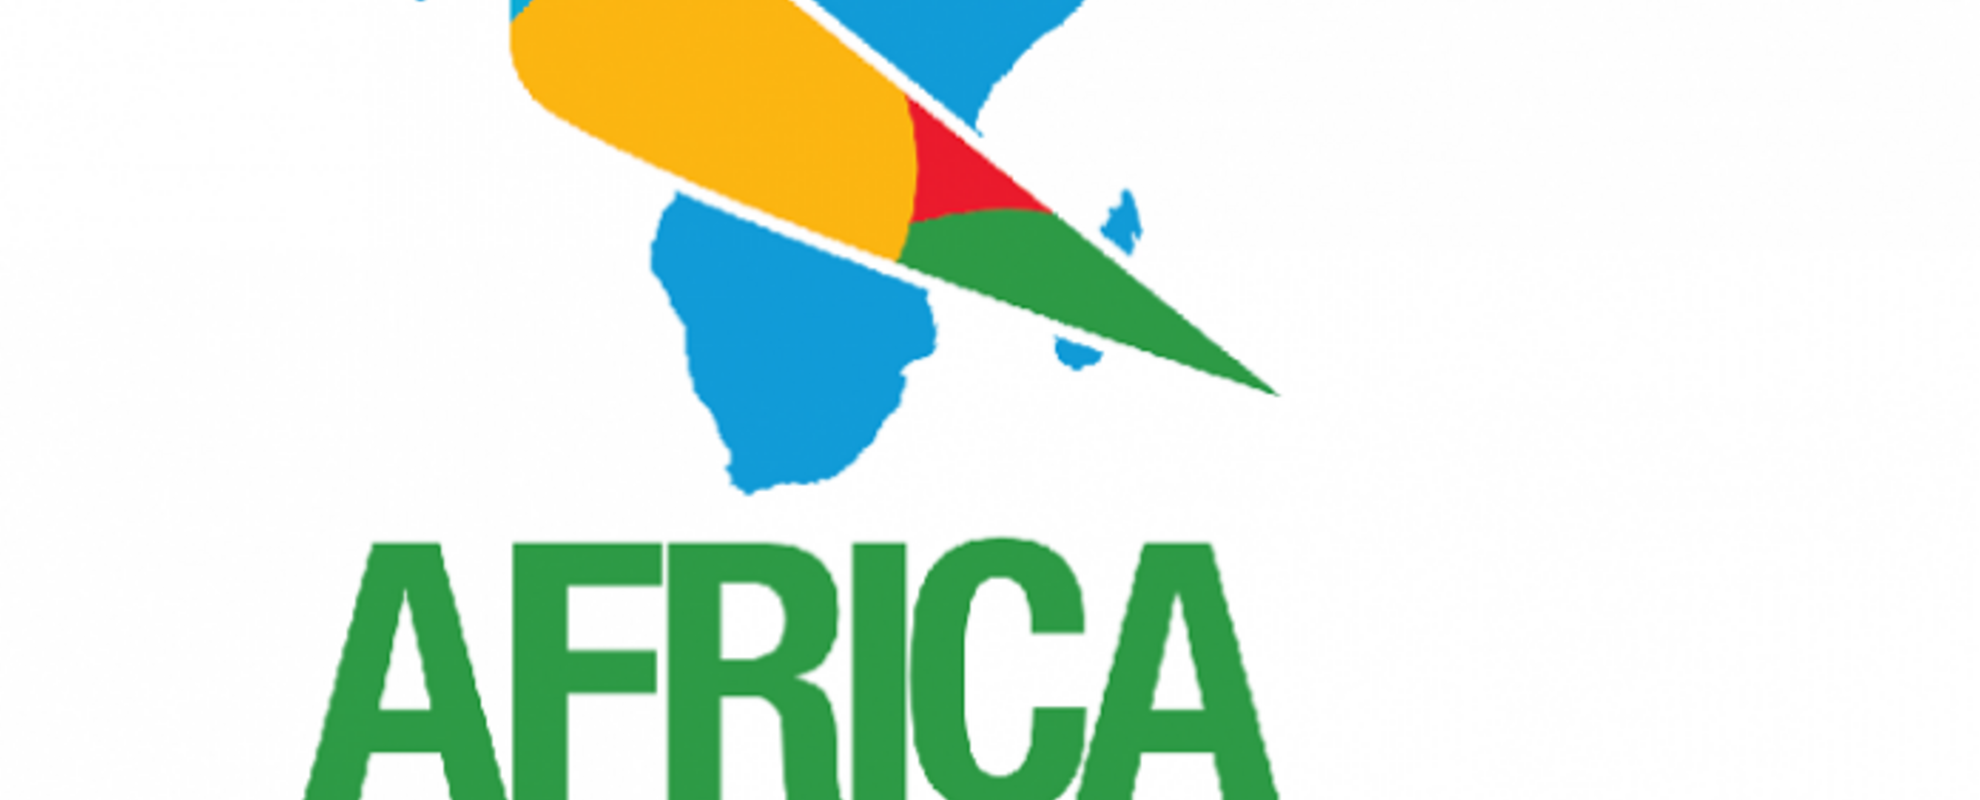 Africa Regional Forum on Sustainable Development